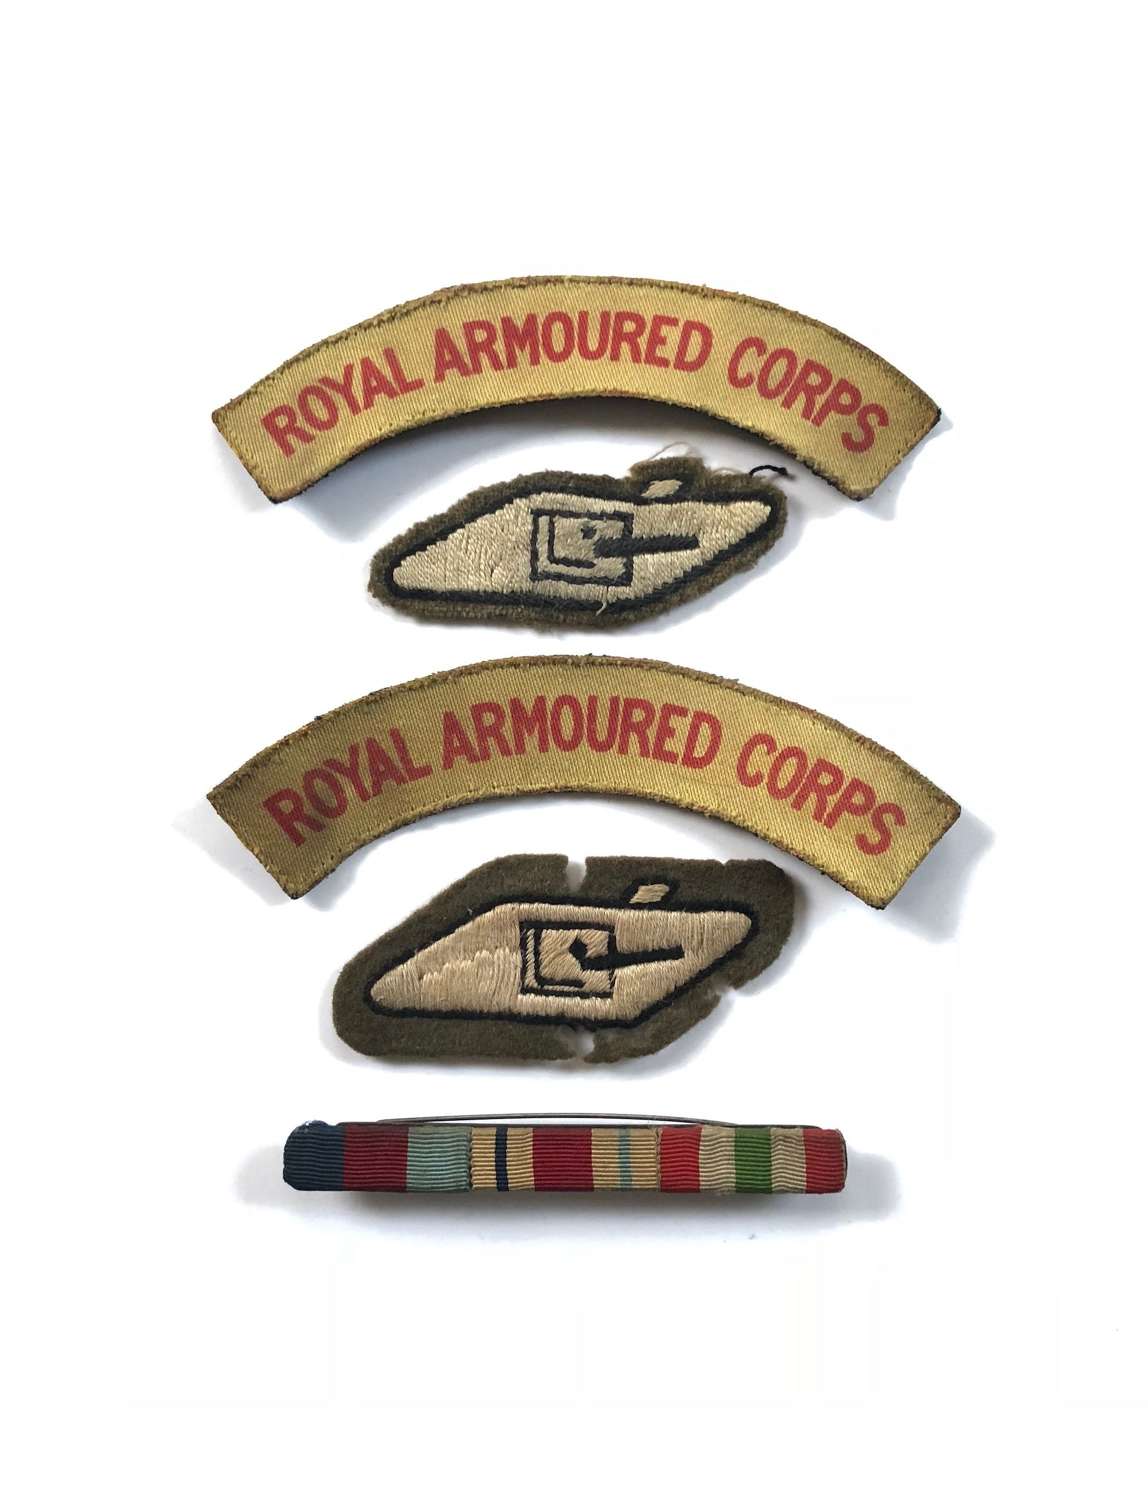 WW2 Royal Armoured Corps Uniform Badge Group.